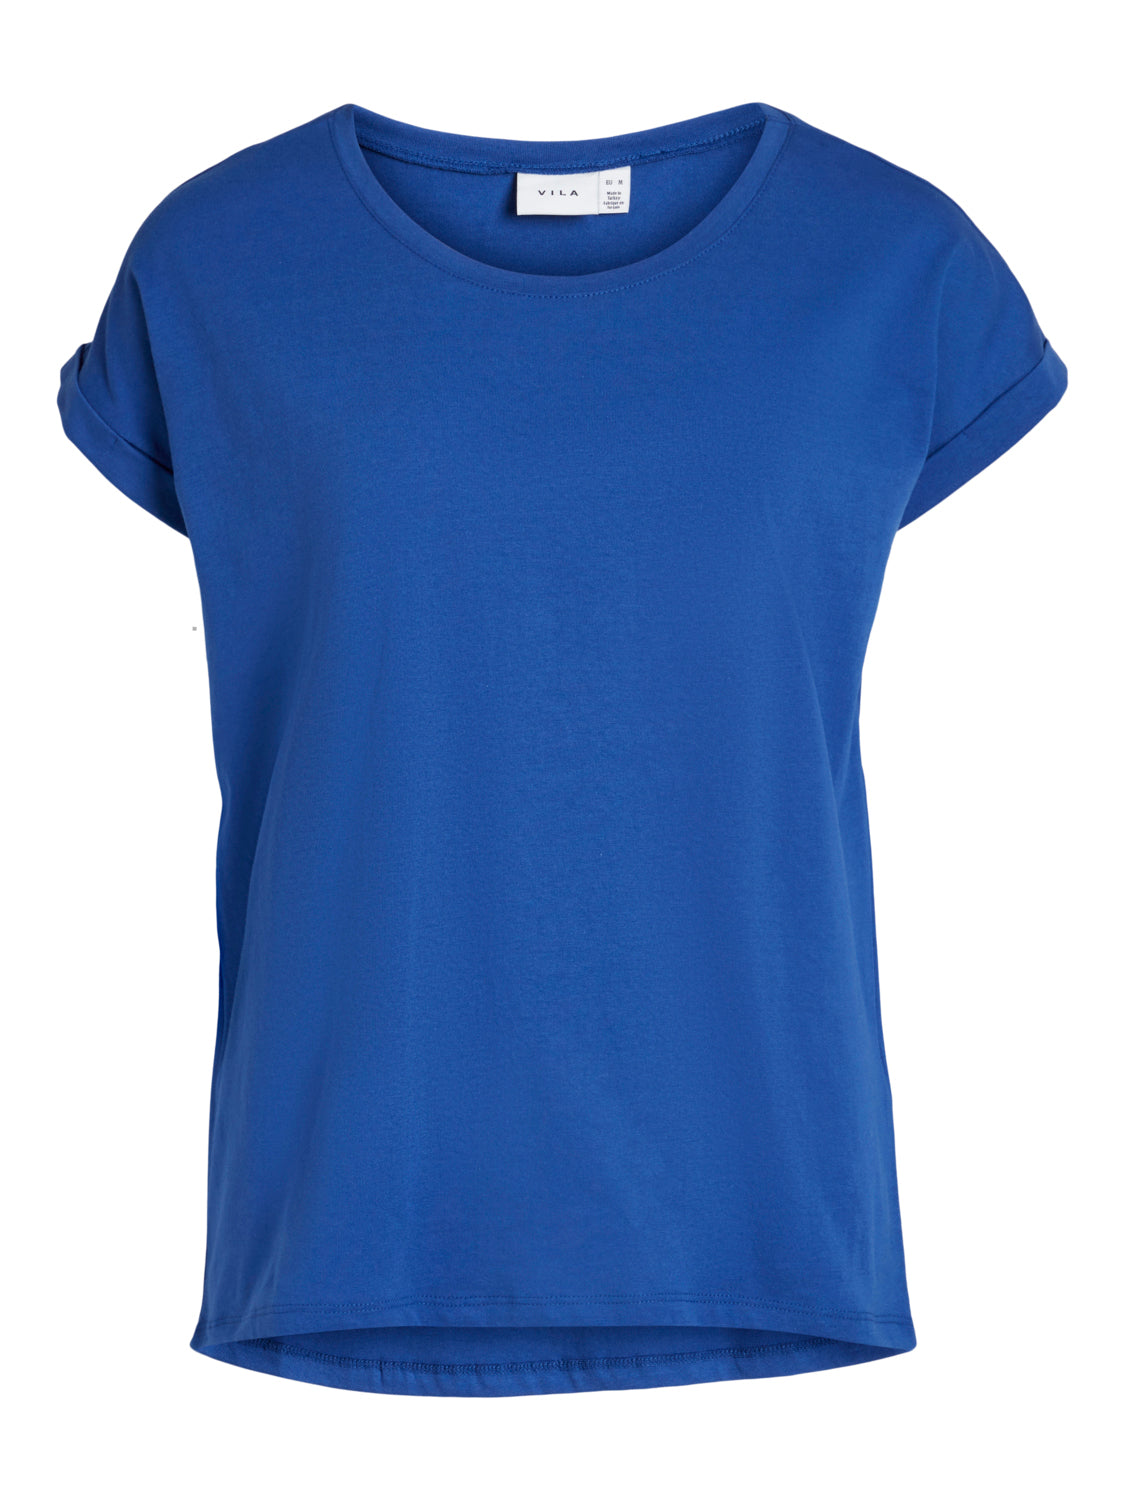 VIDREAMERS T-shirts & Tops - Mazarine Blue